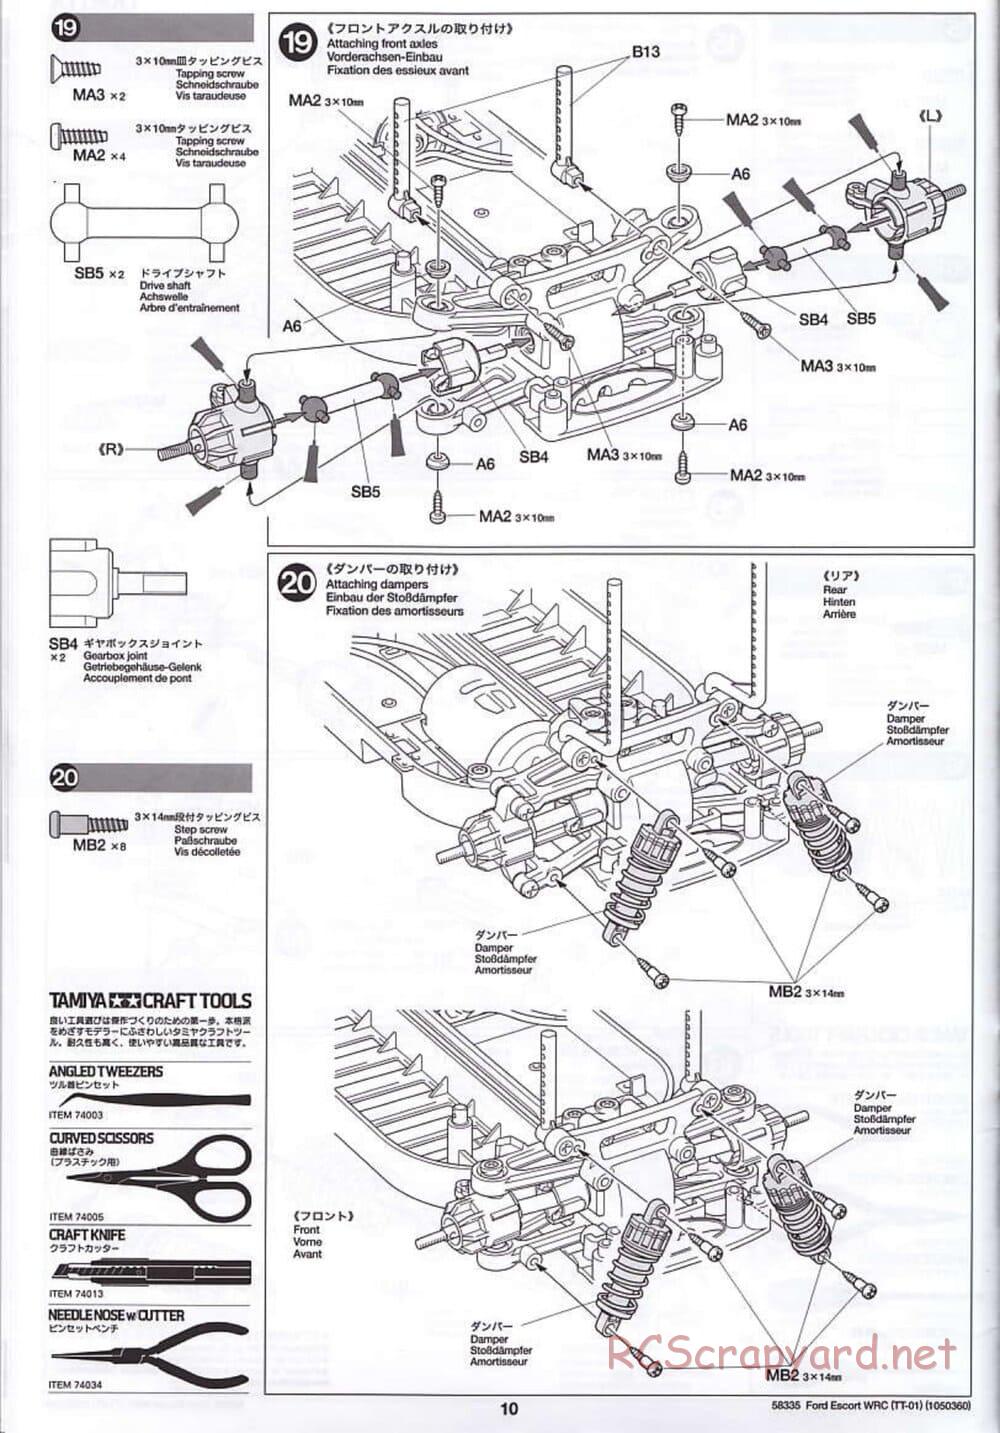 Tamiya - Ford Escort WRC - TT-01 Chassis - Manual - Page 10